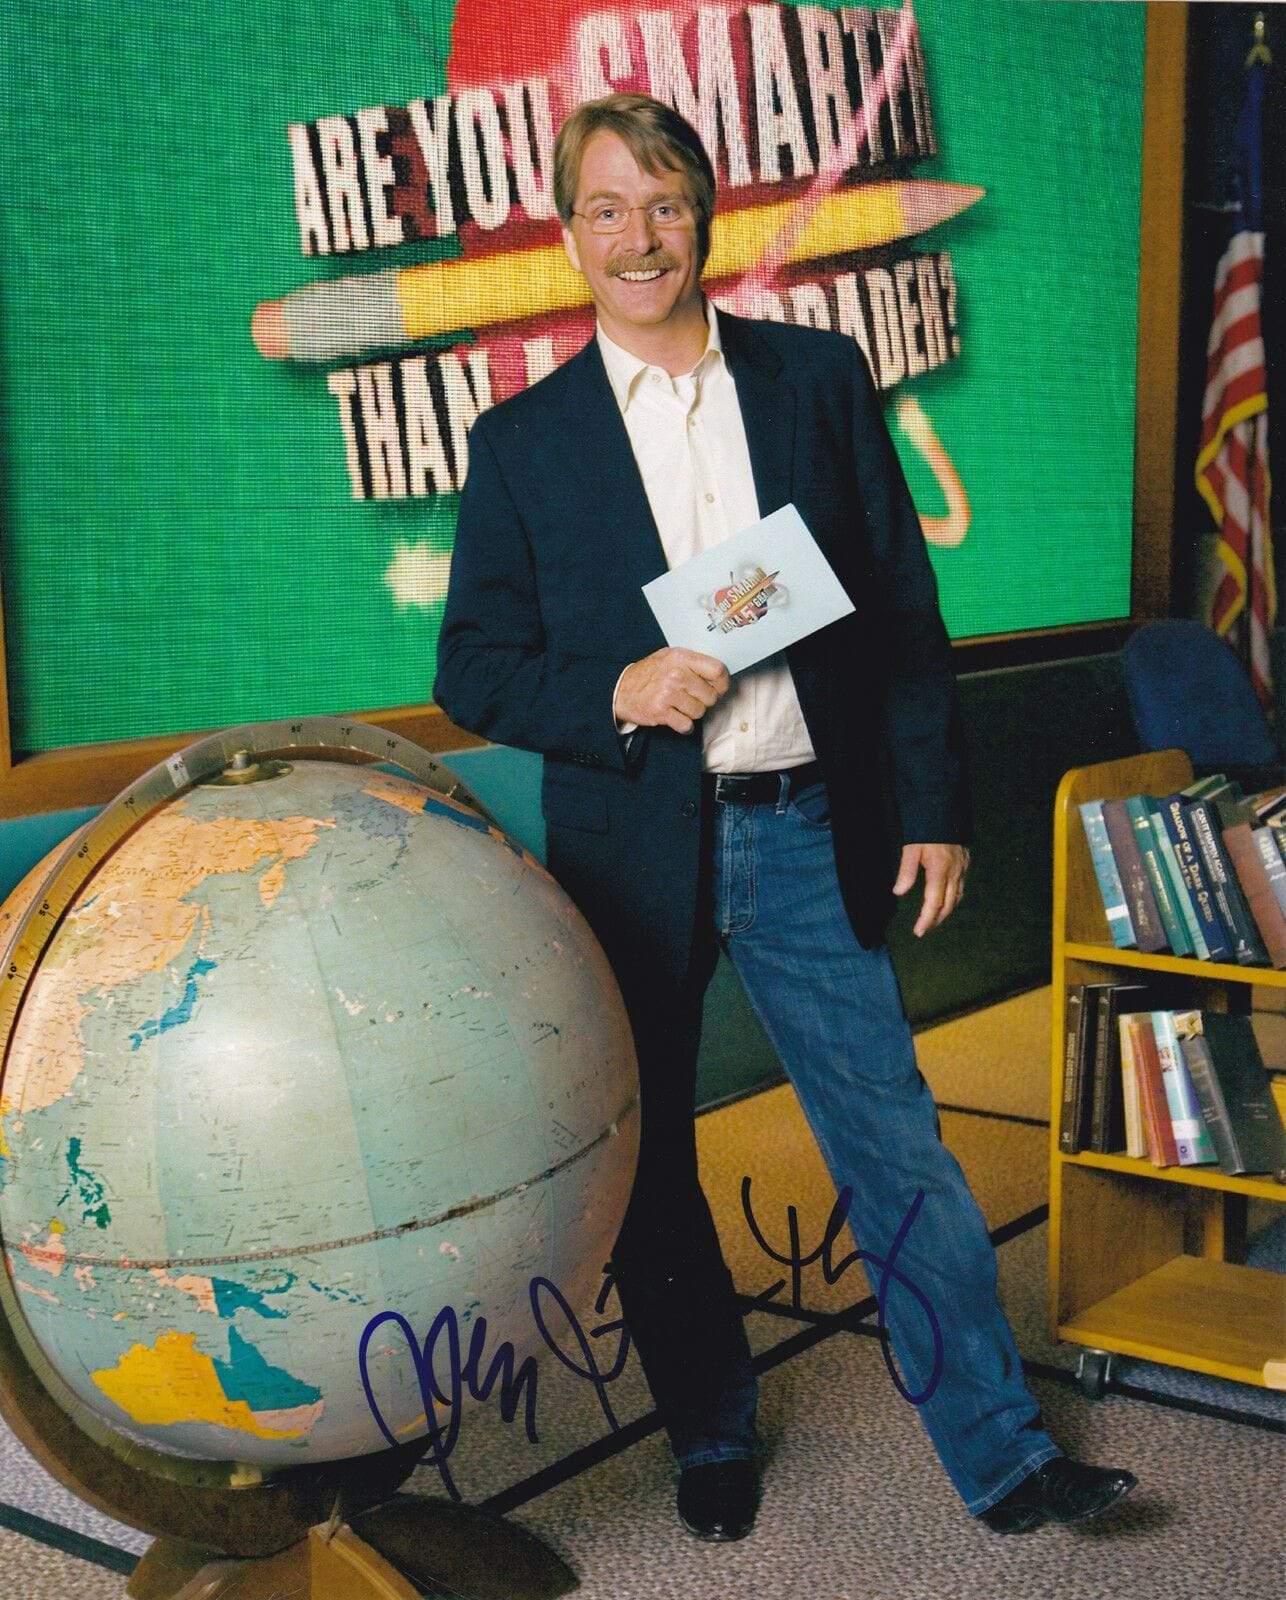 Jeff Foxworthy Authentic Autographed 8x10 Photo - Prime Time Signatures - TV & Film